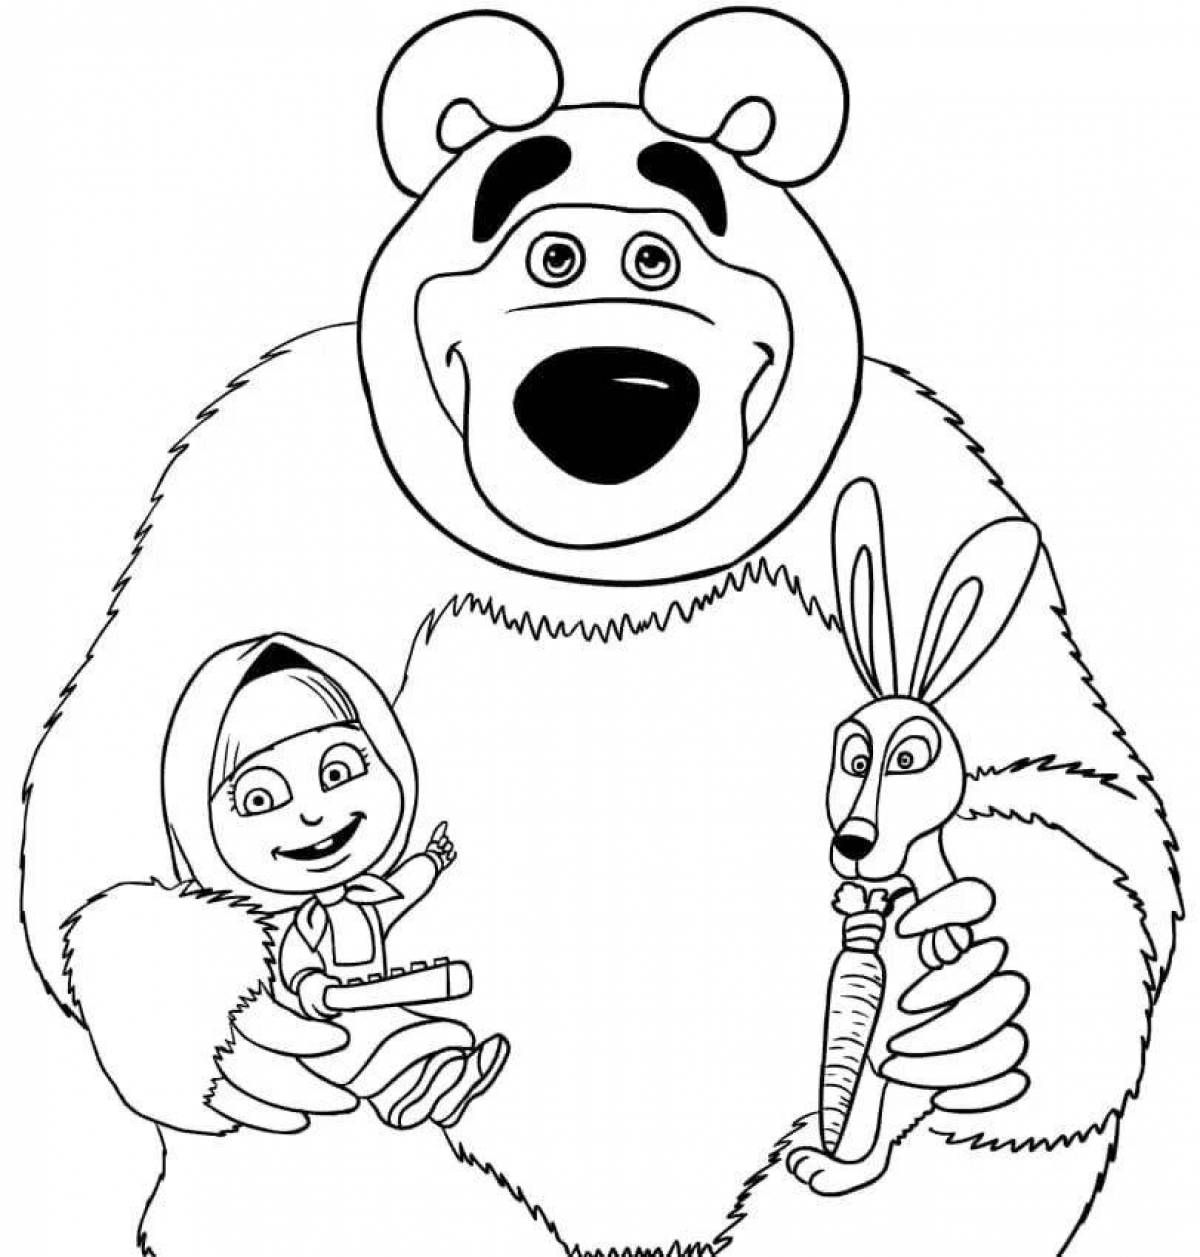 Funny teddy bear-masha and bear coloring book